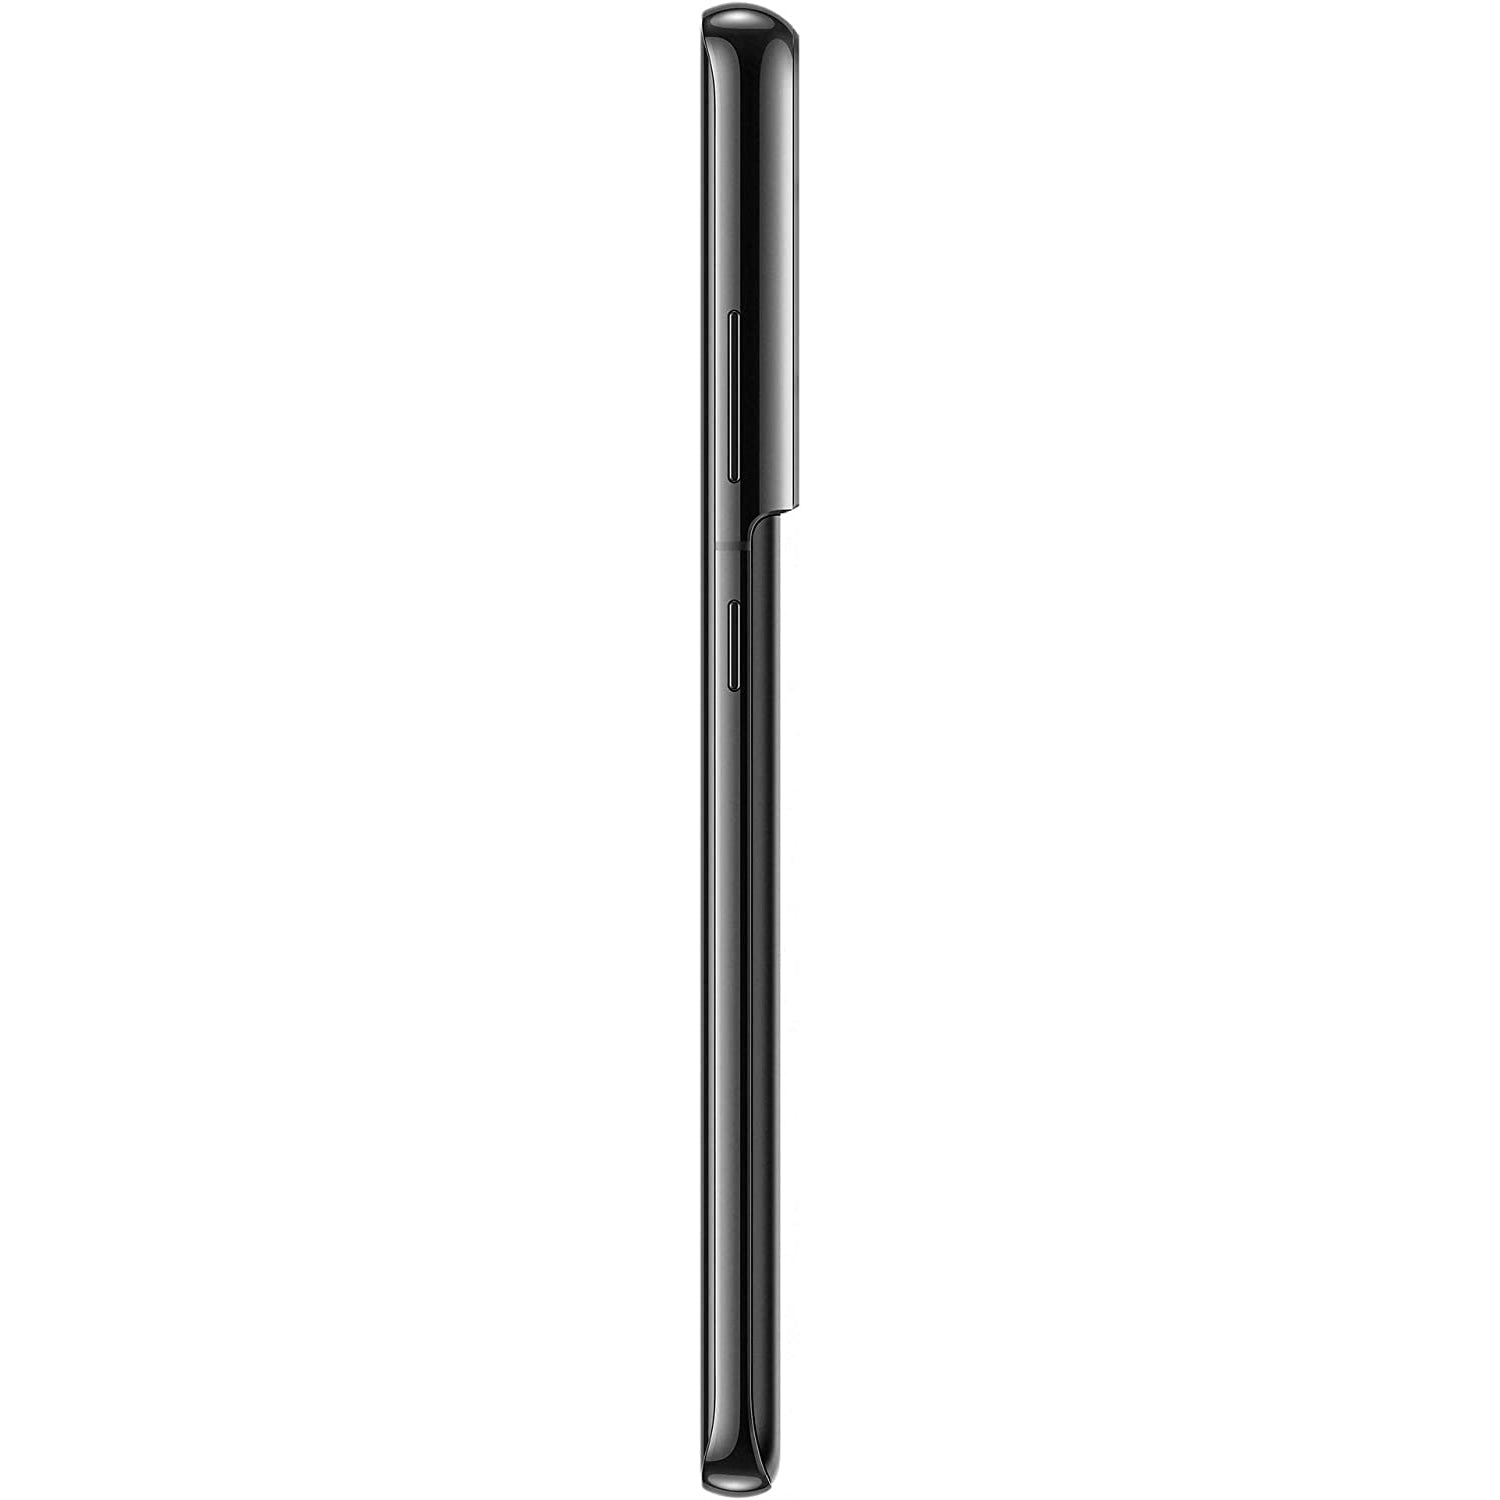 Samsung Galaxy S21 Ultra 5G 512GB Phantom Black Unlocked - Good Condition